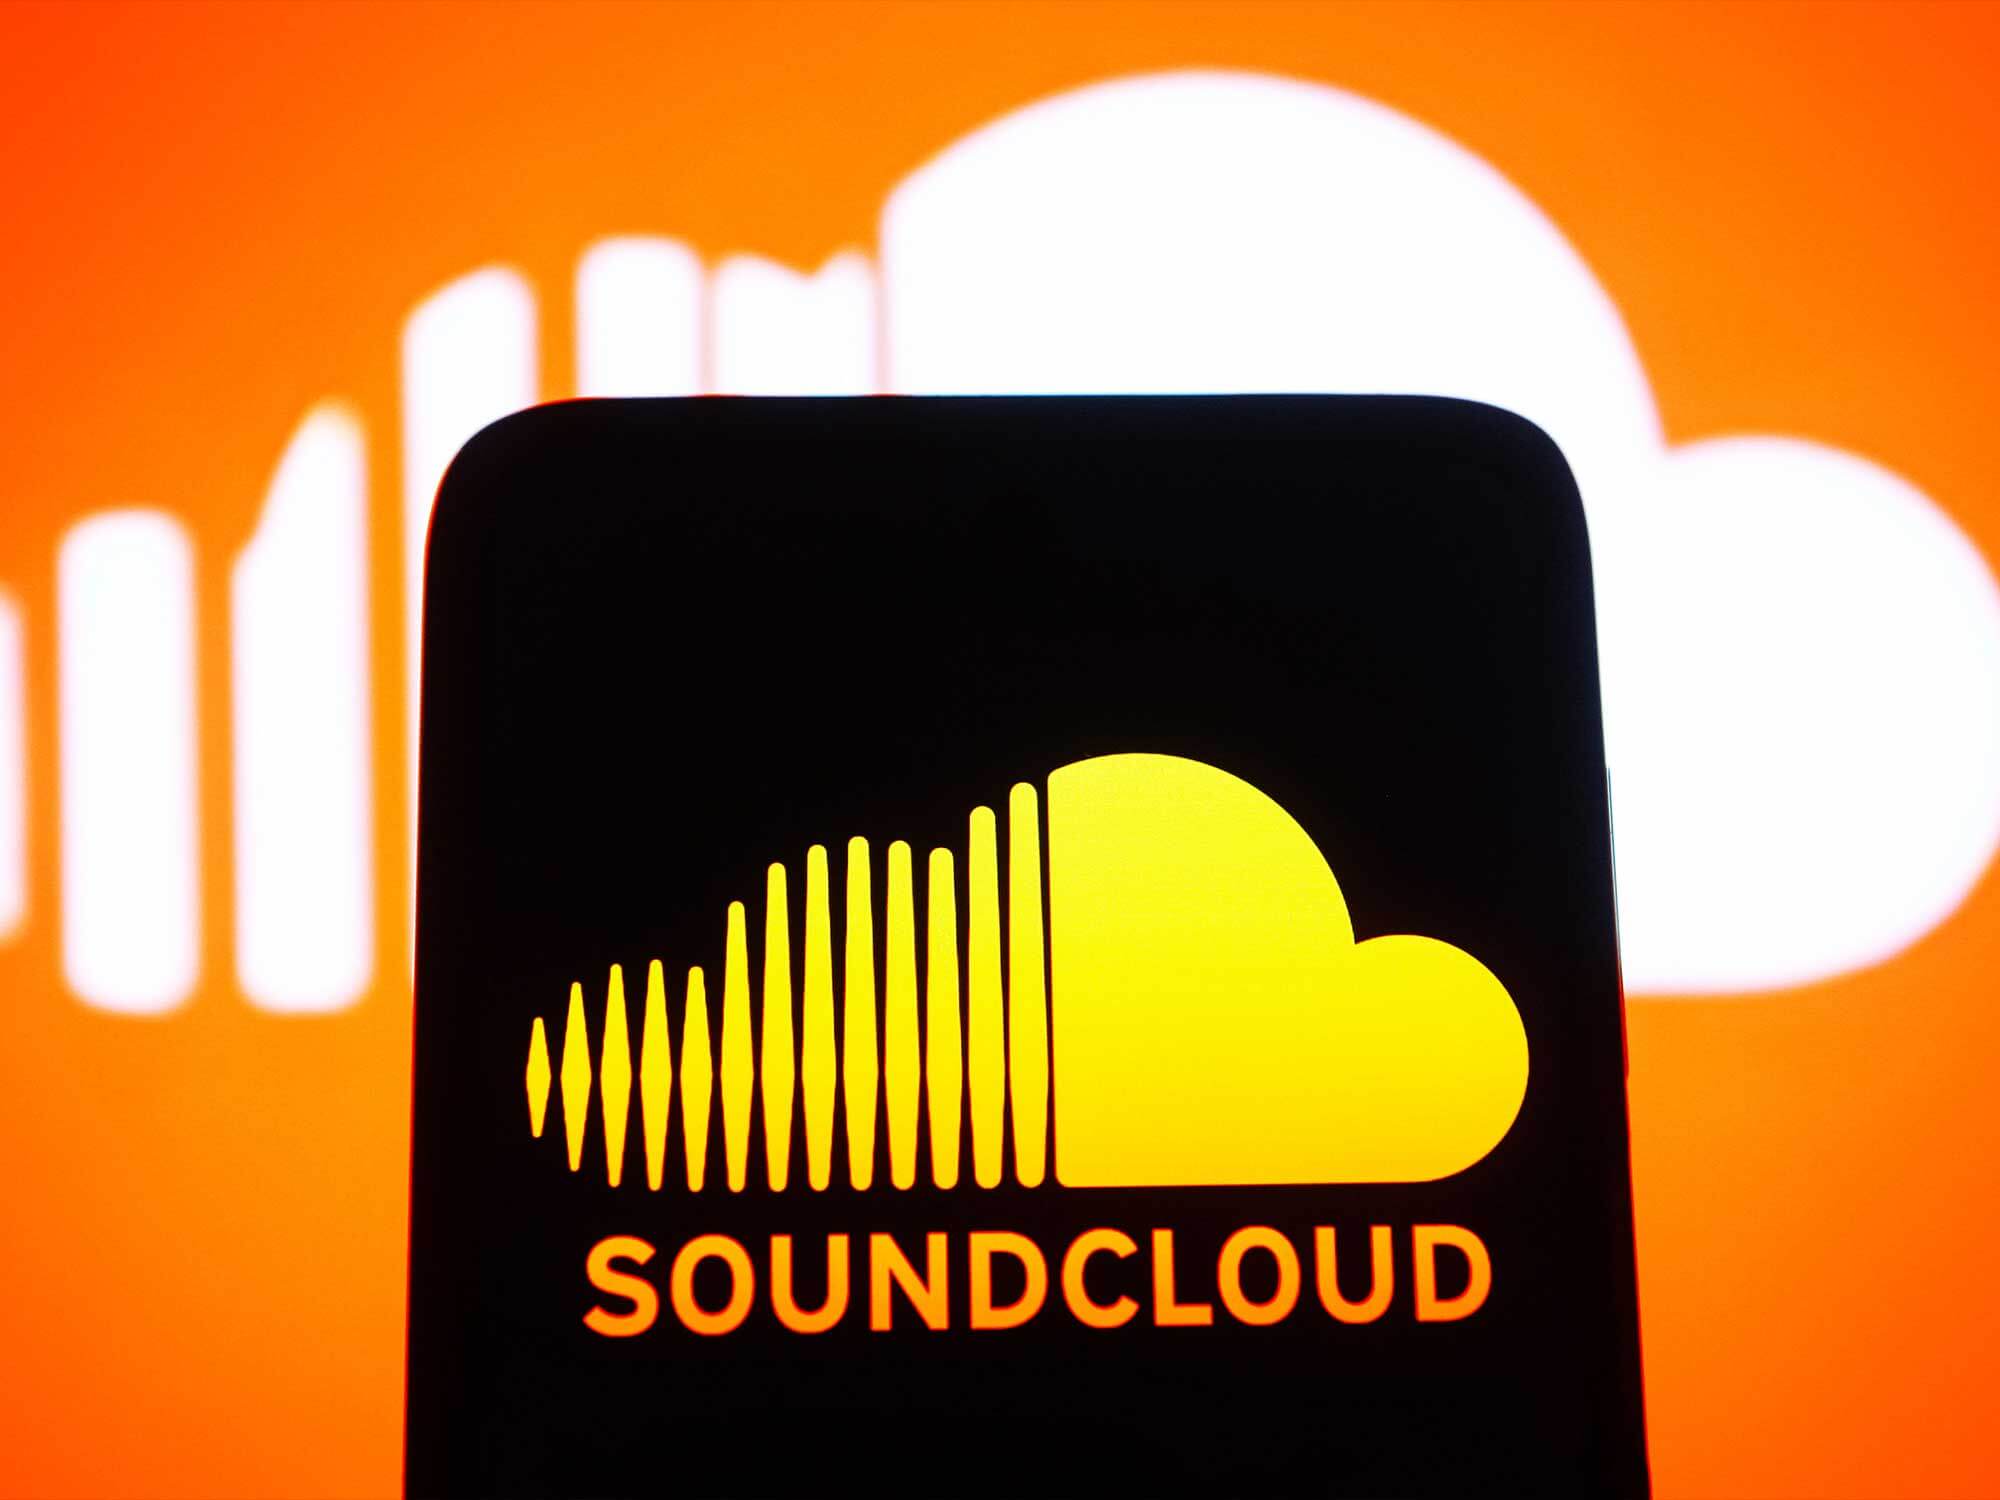 Soundcloud logo on a phone